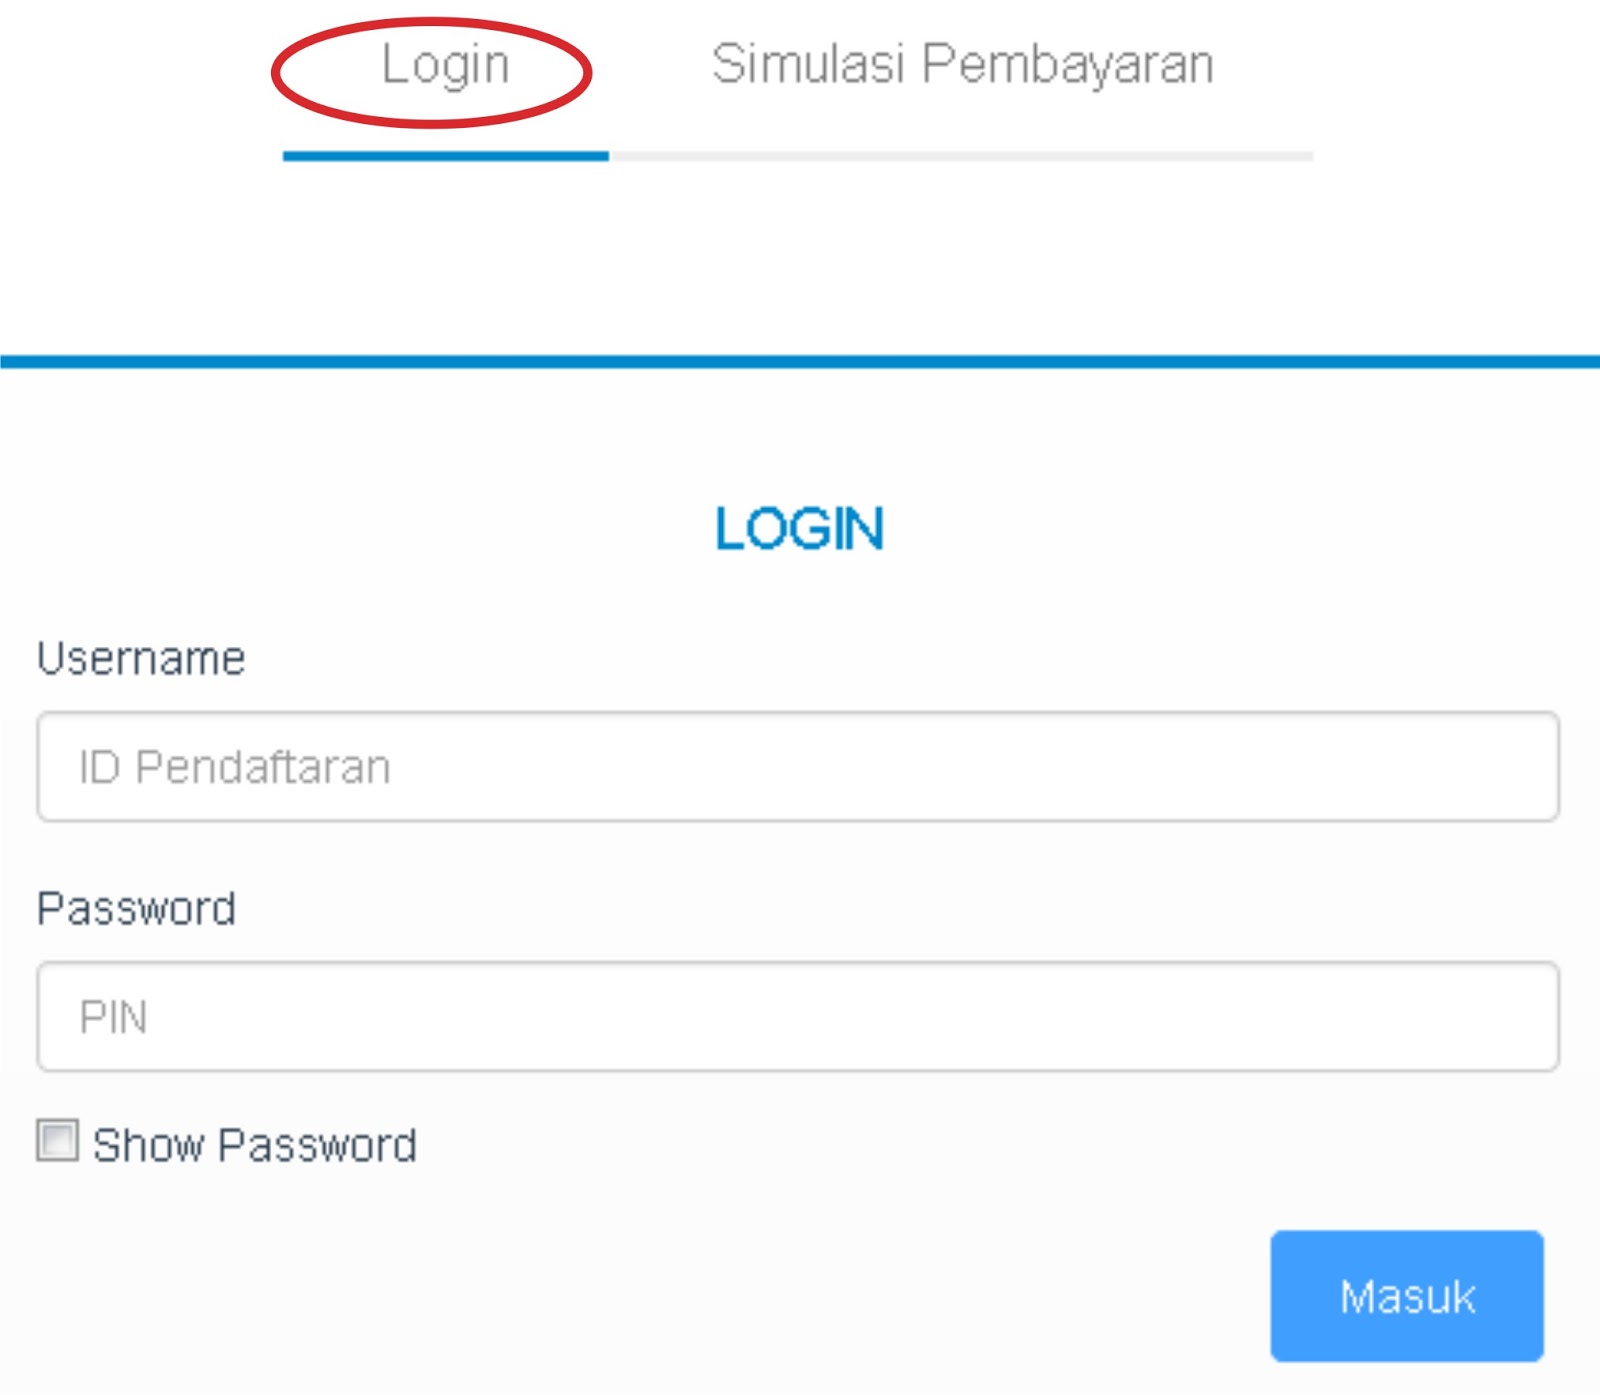 Silahkan login menggunakan ID pendaftaran dan Password yang didapatkan setelah melakukan pendaftaran